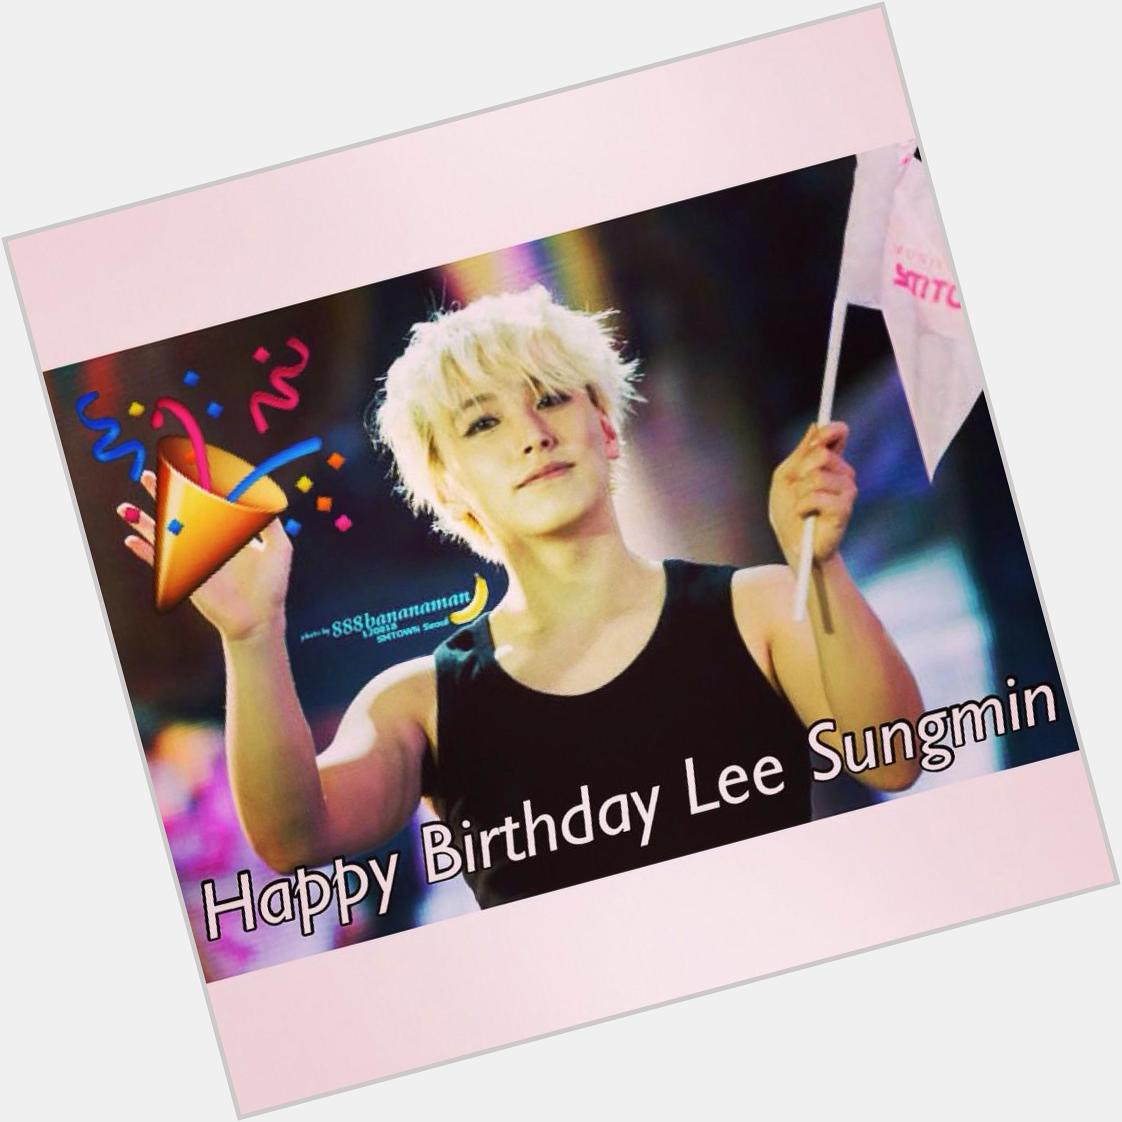 Happy Birthday Lee Sungmin
Muaahhh  